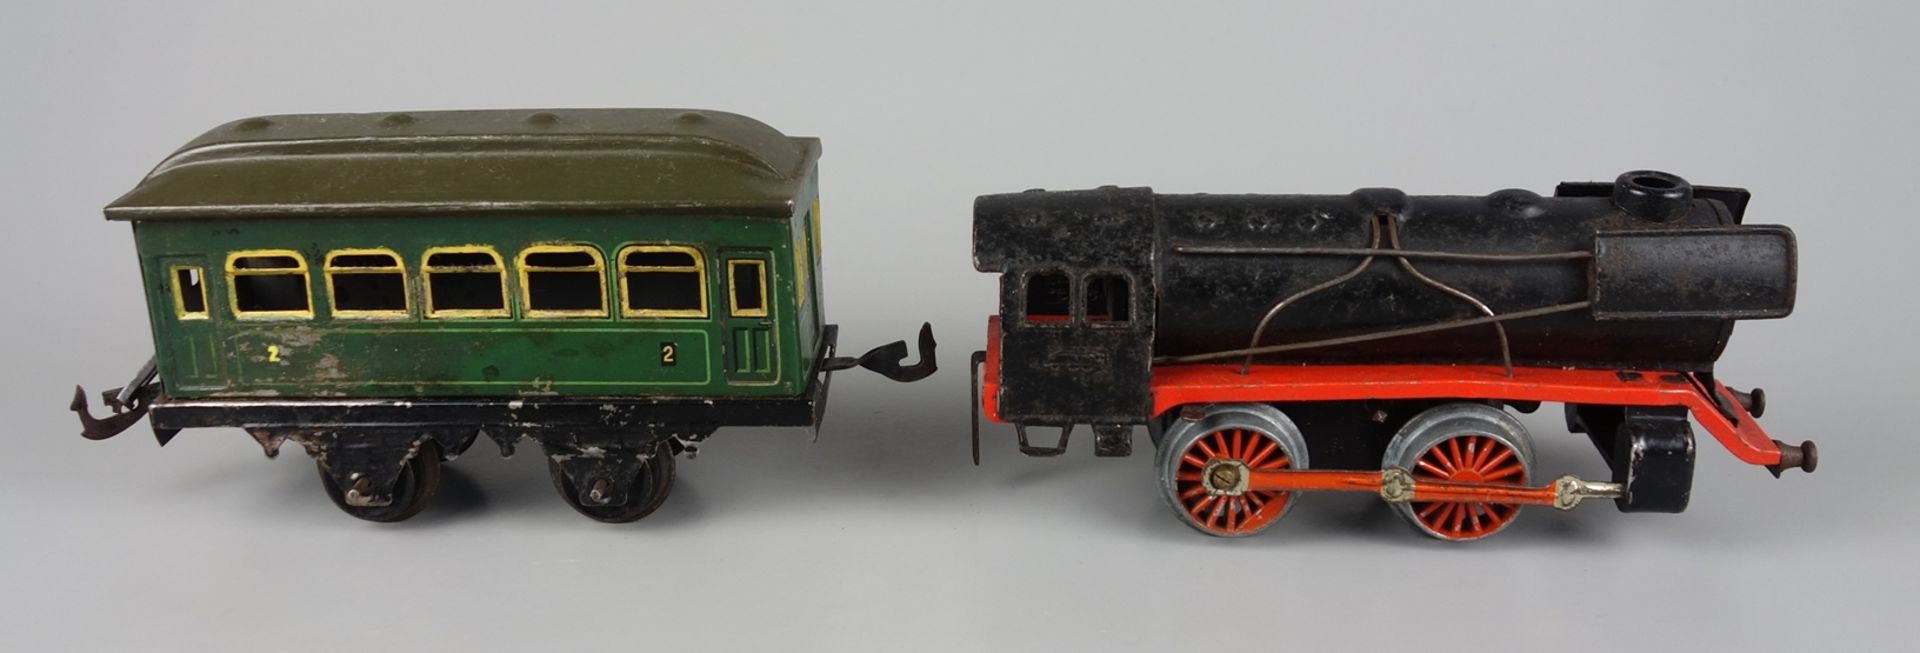 Steam locomotive and passenger car, 1* Bing, gauge 0